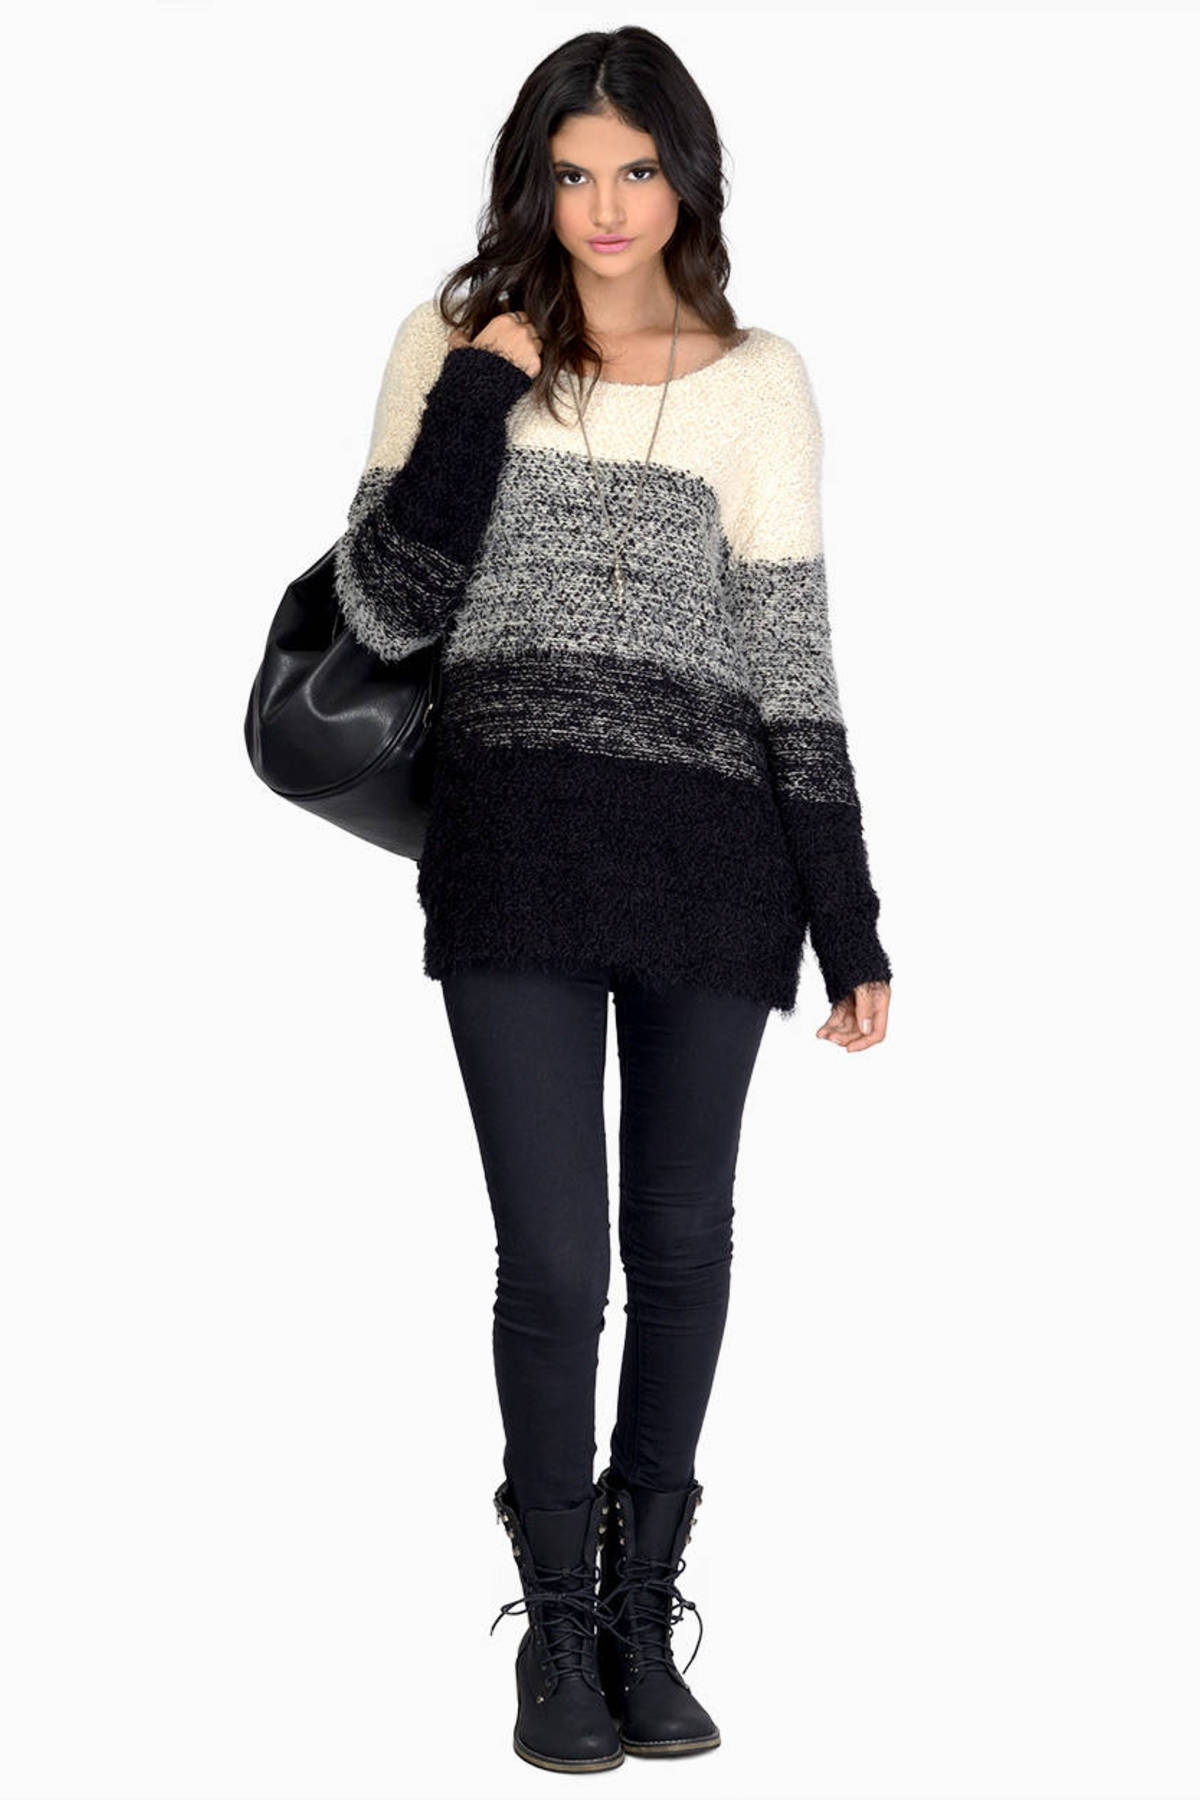 Fade Into Darkness Sweater in Black Multi - $62 | Tobi US